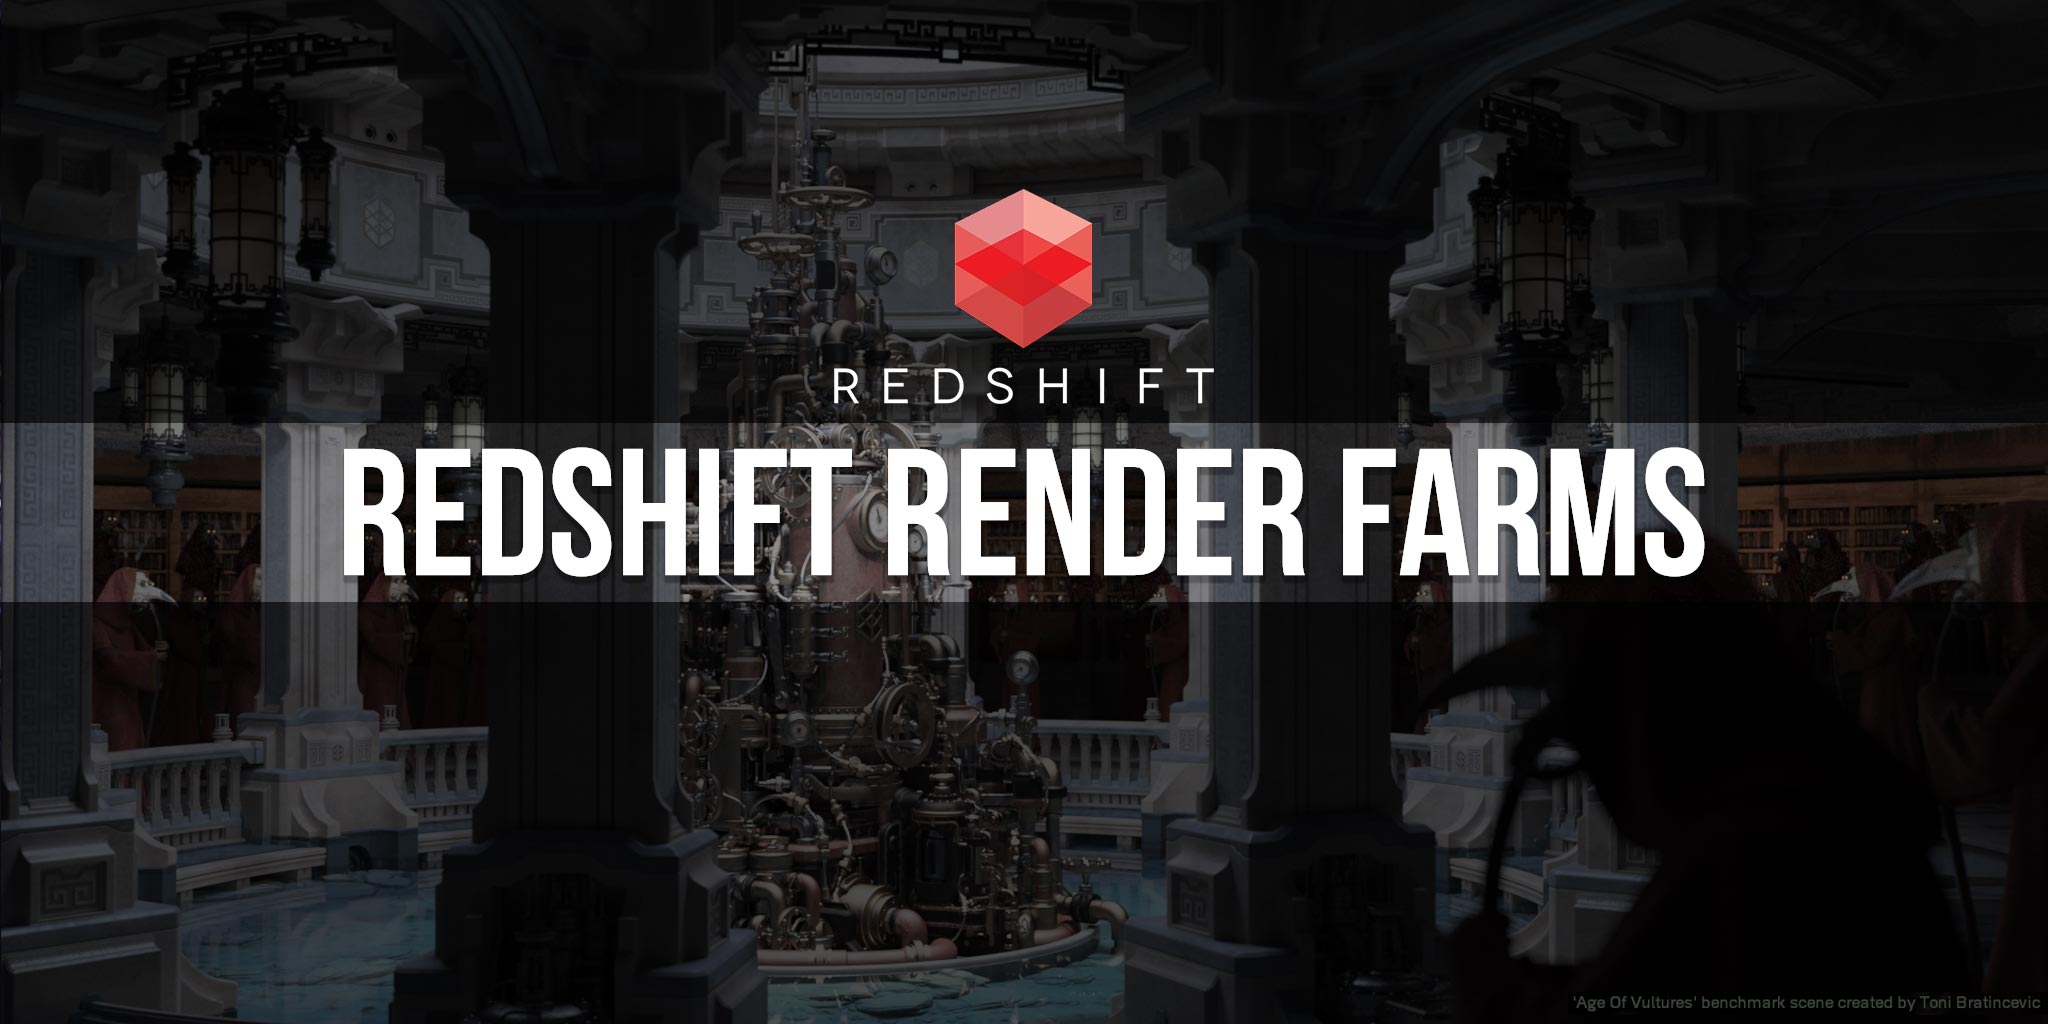 Redshift render farms